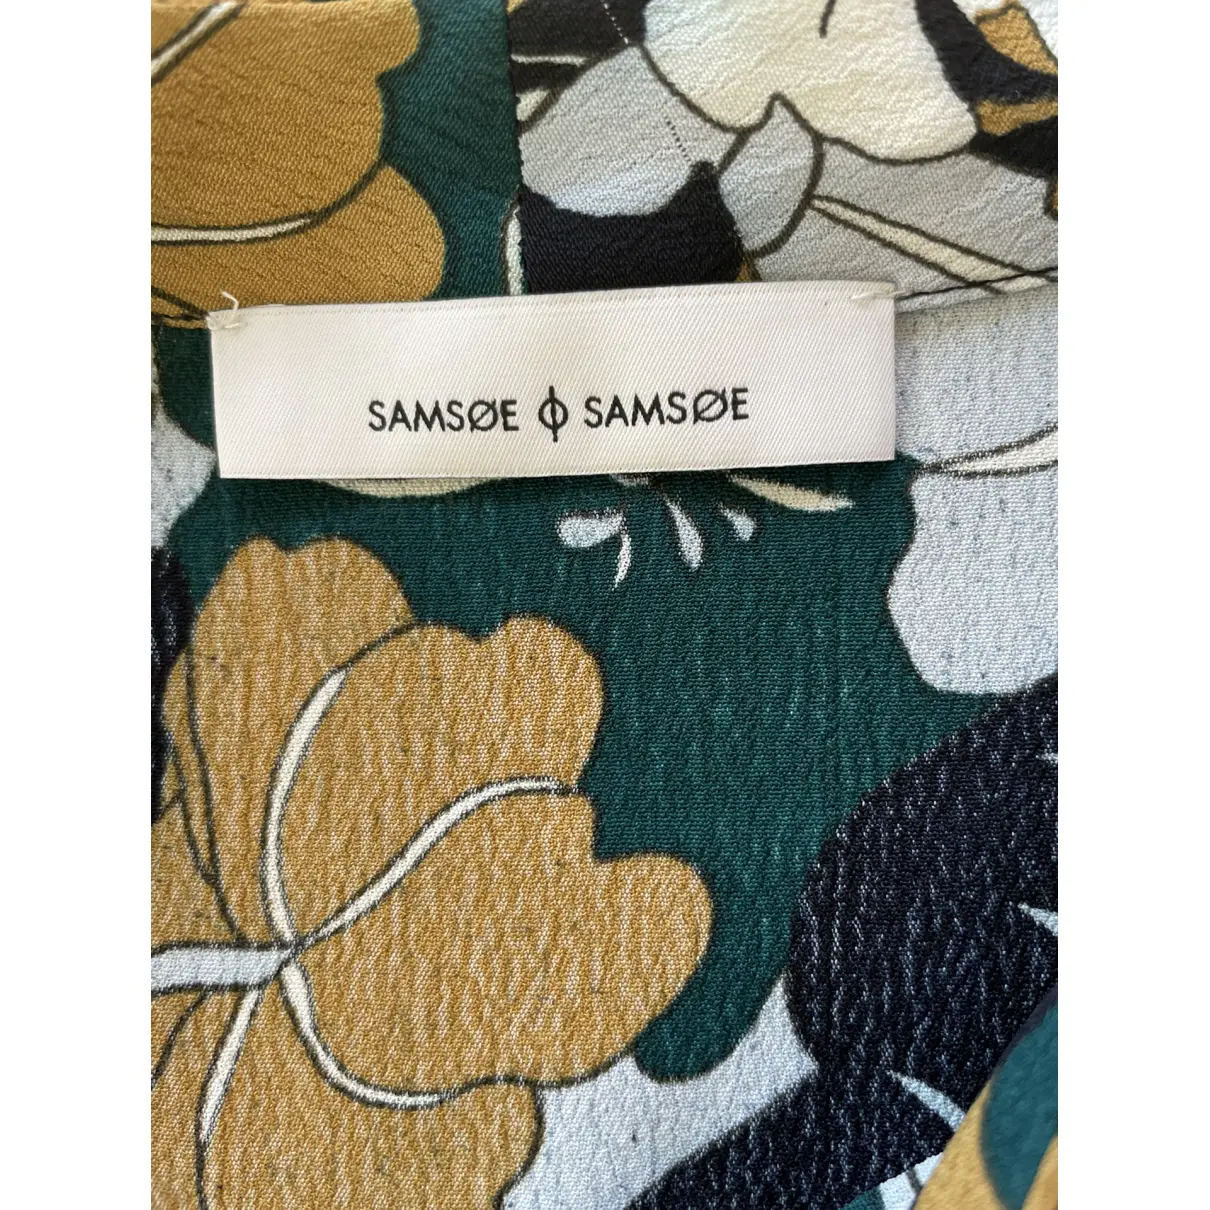 Buy Samsoe & Samsoe Blouse online